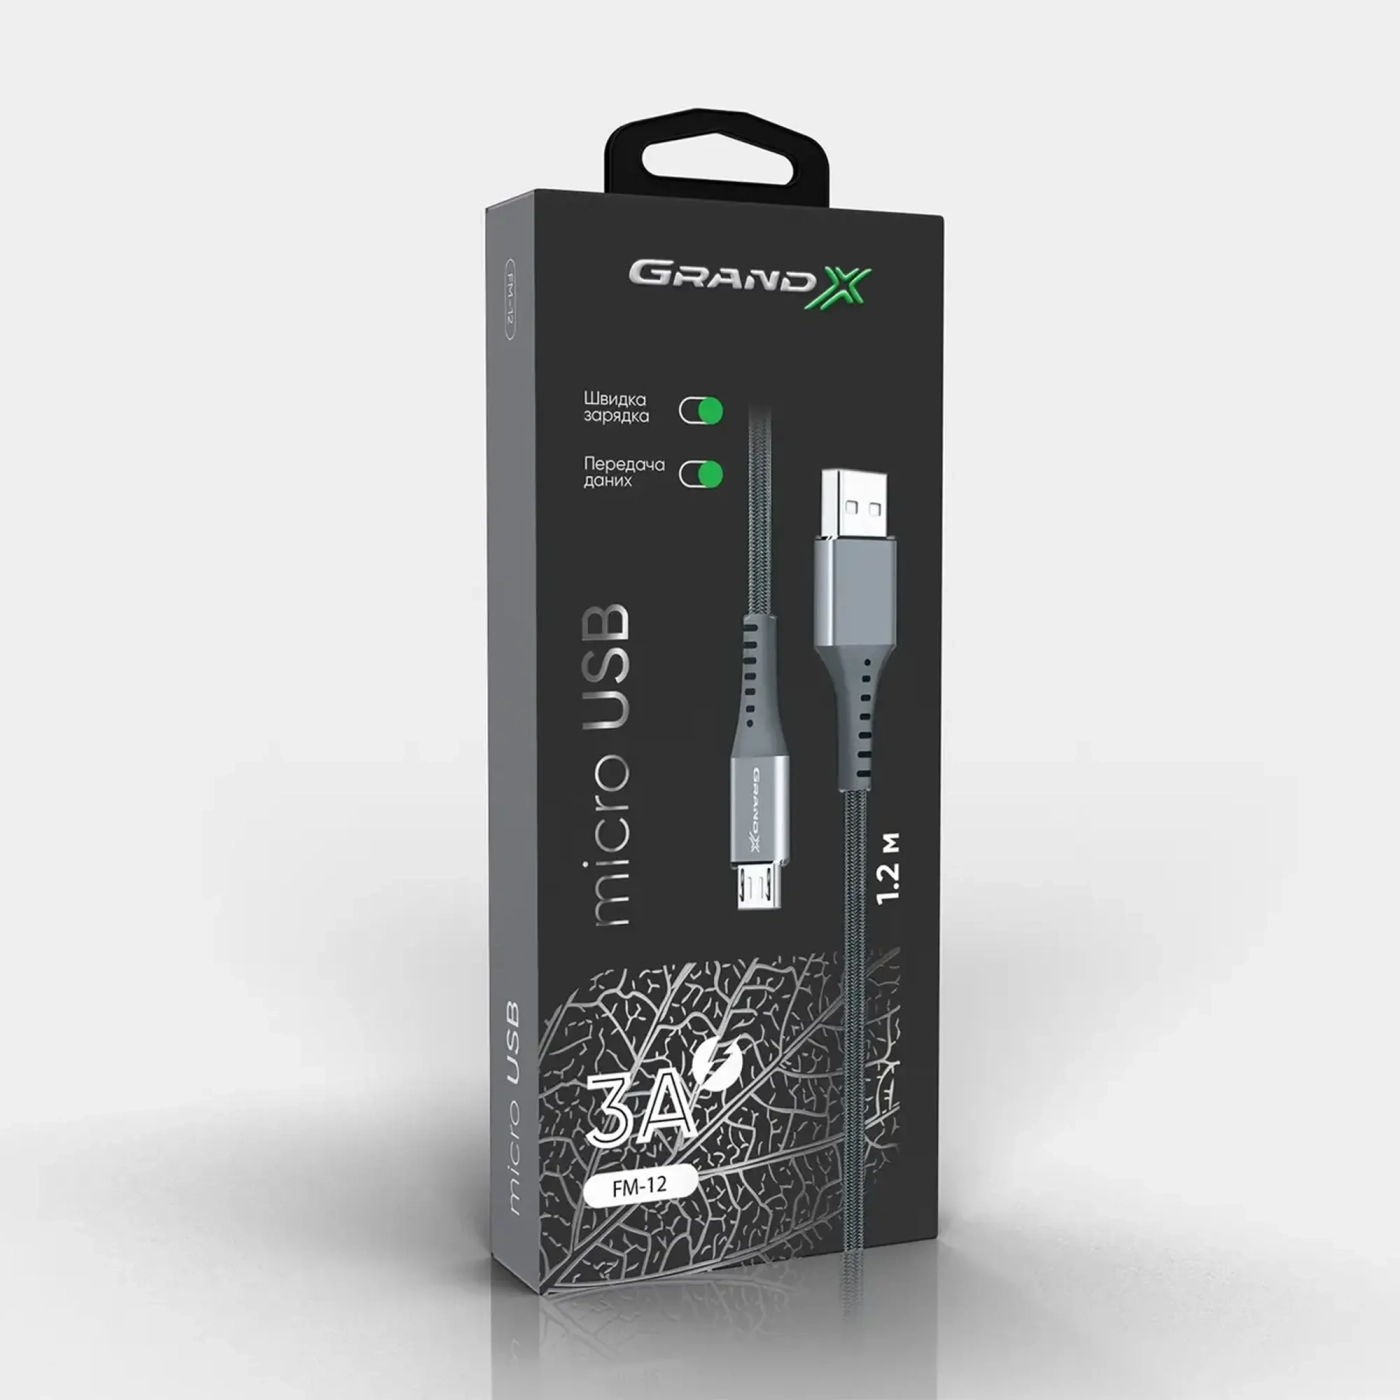 Купить Кабель Grand-X USB-micro USB 3A, 1.2m, Fast Сharge, Grey толст.нейлон оплетки, премиум BOX (FM-12G) - фото 4